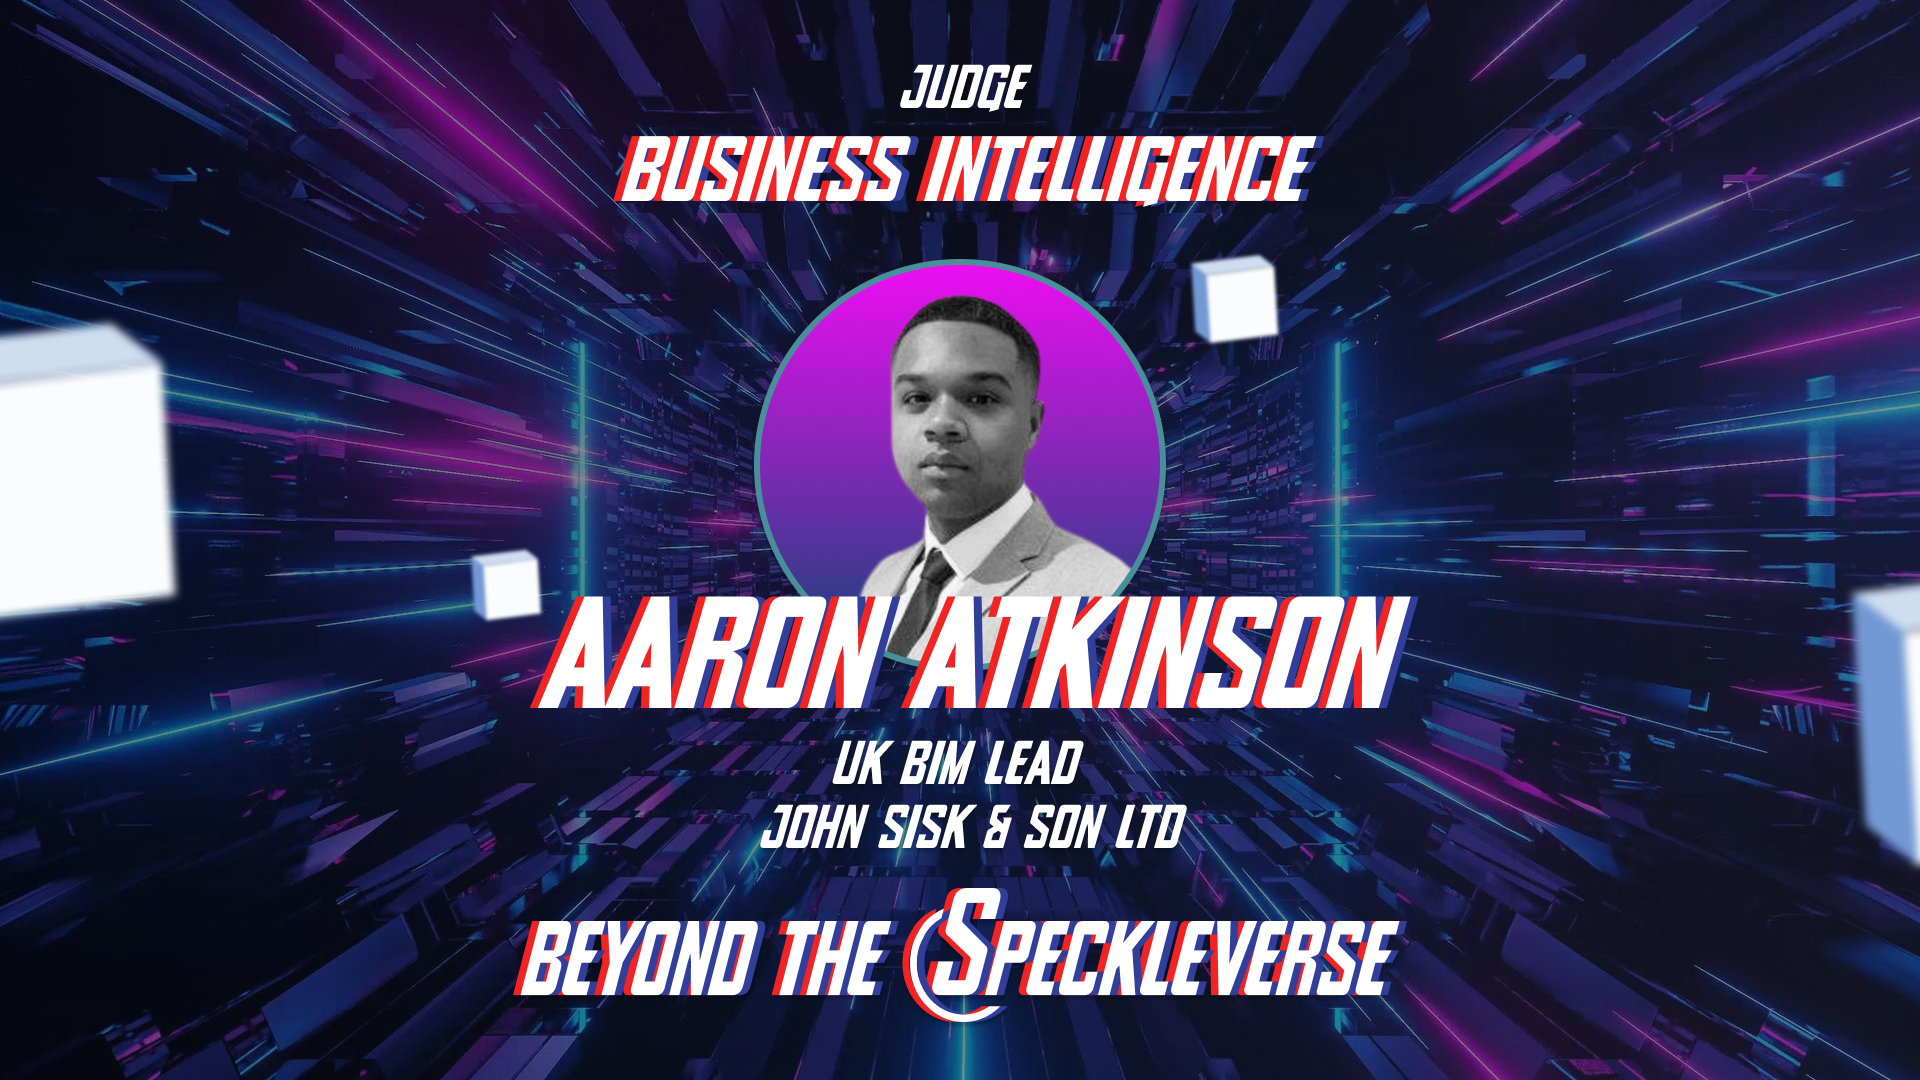 Meet the Business Intelligence Judge: Aaron Atkinson